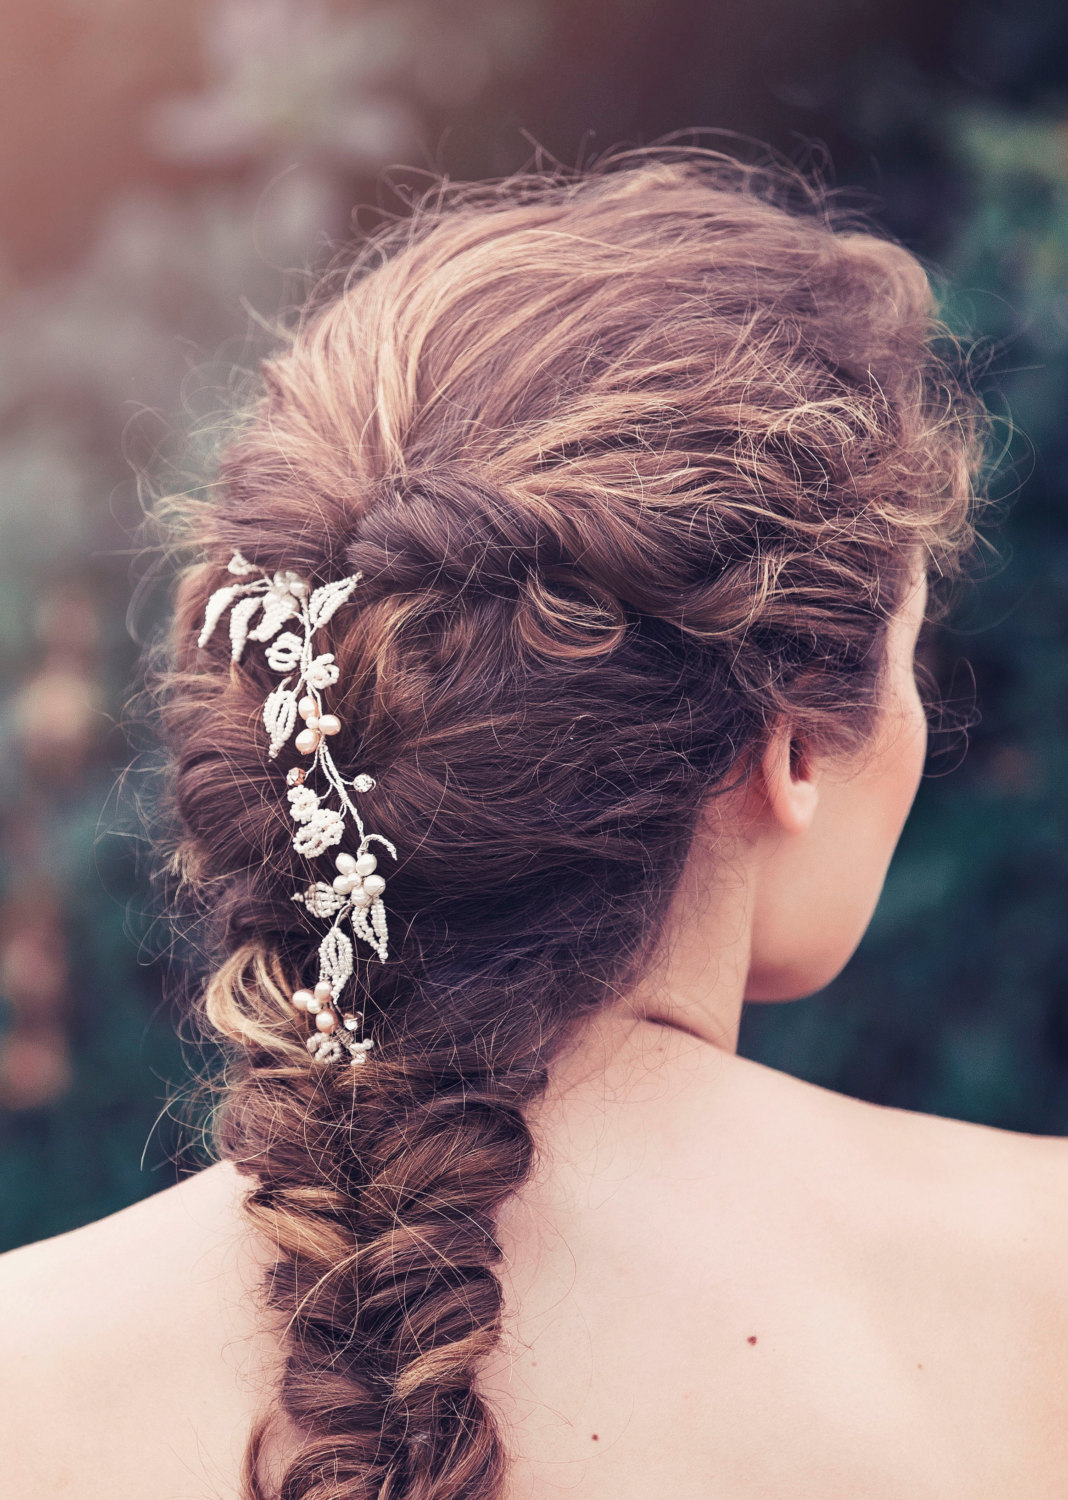 Bridal hair vines for weddings | by Gadegaard Design | photo by Tina Liv | https://emmalinebride.com/bride/bridal-hair-vines-for-weddings/